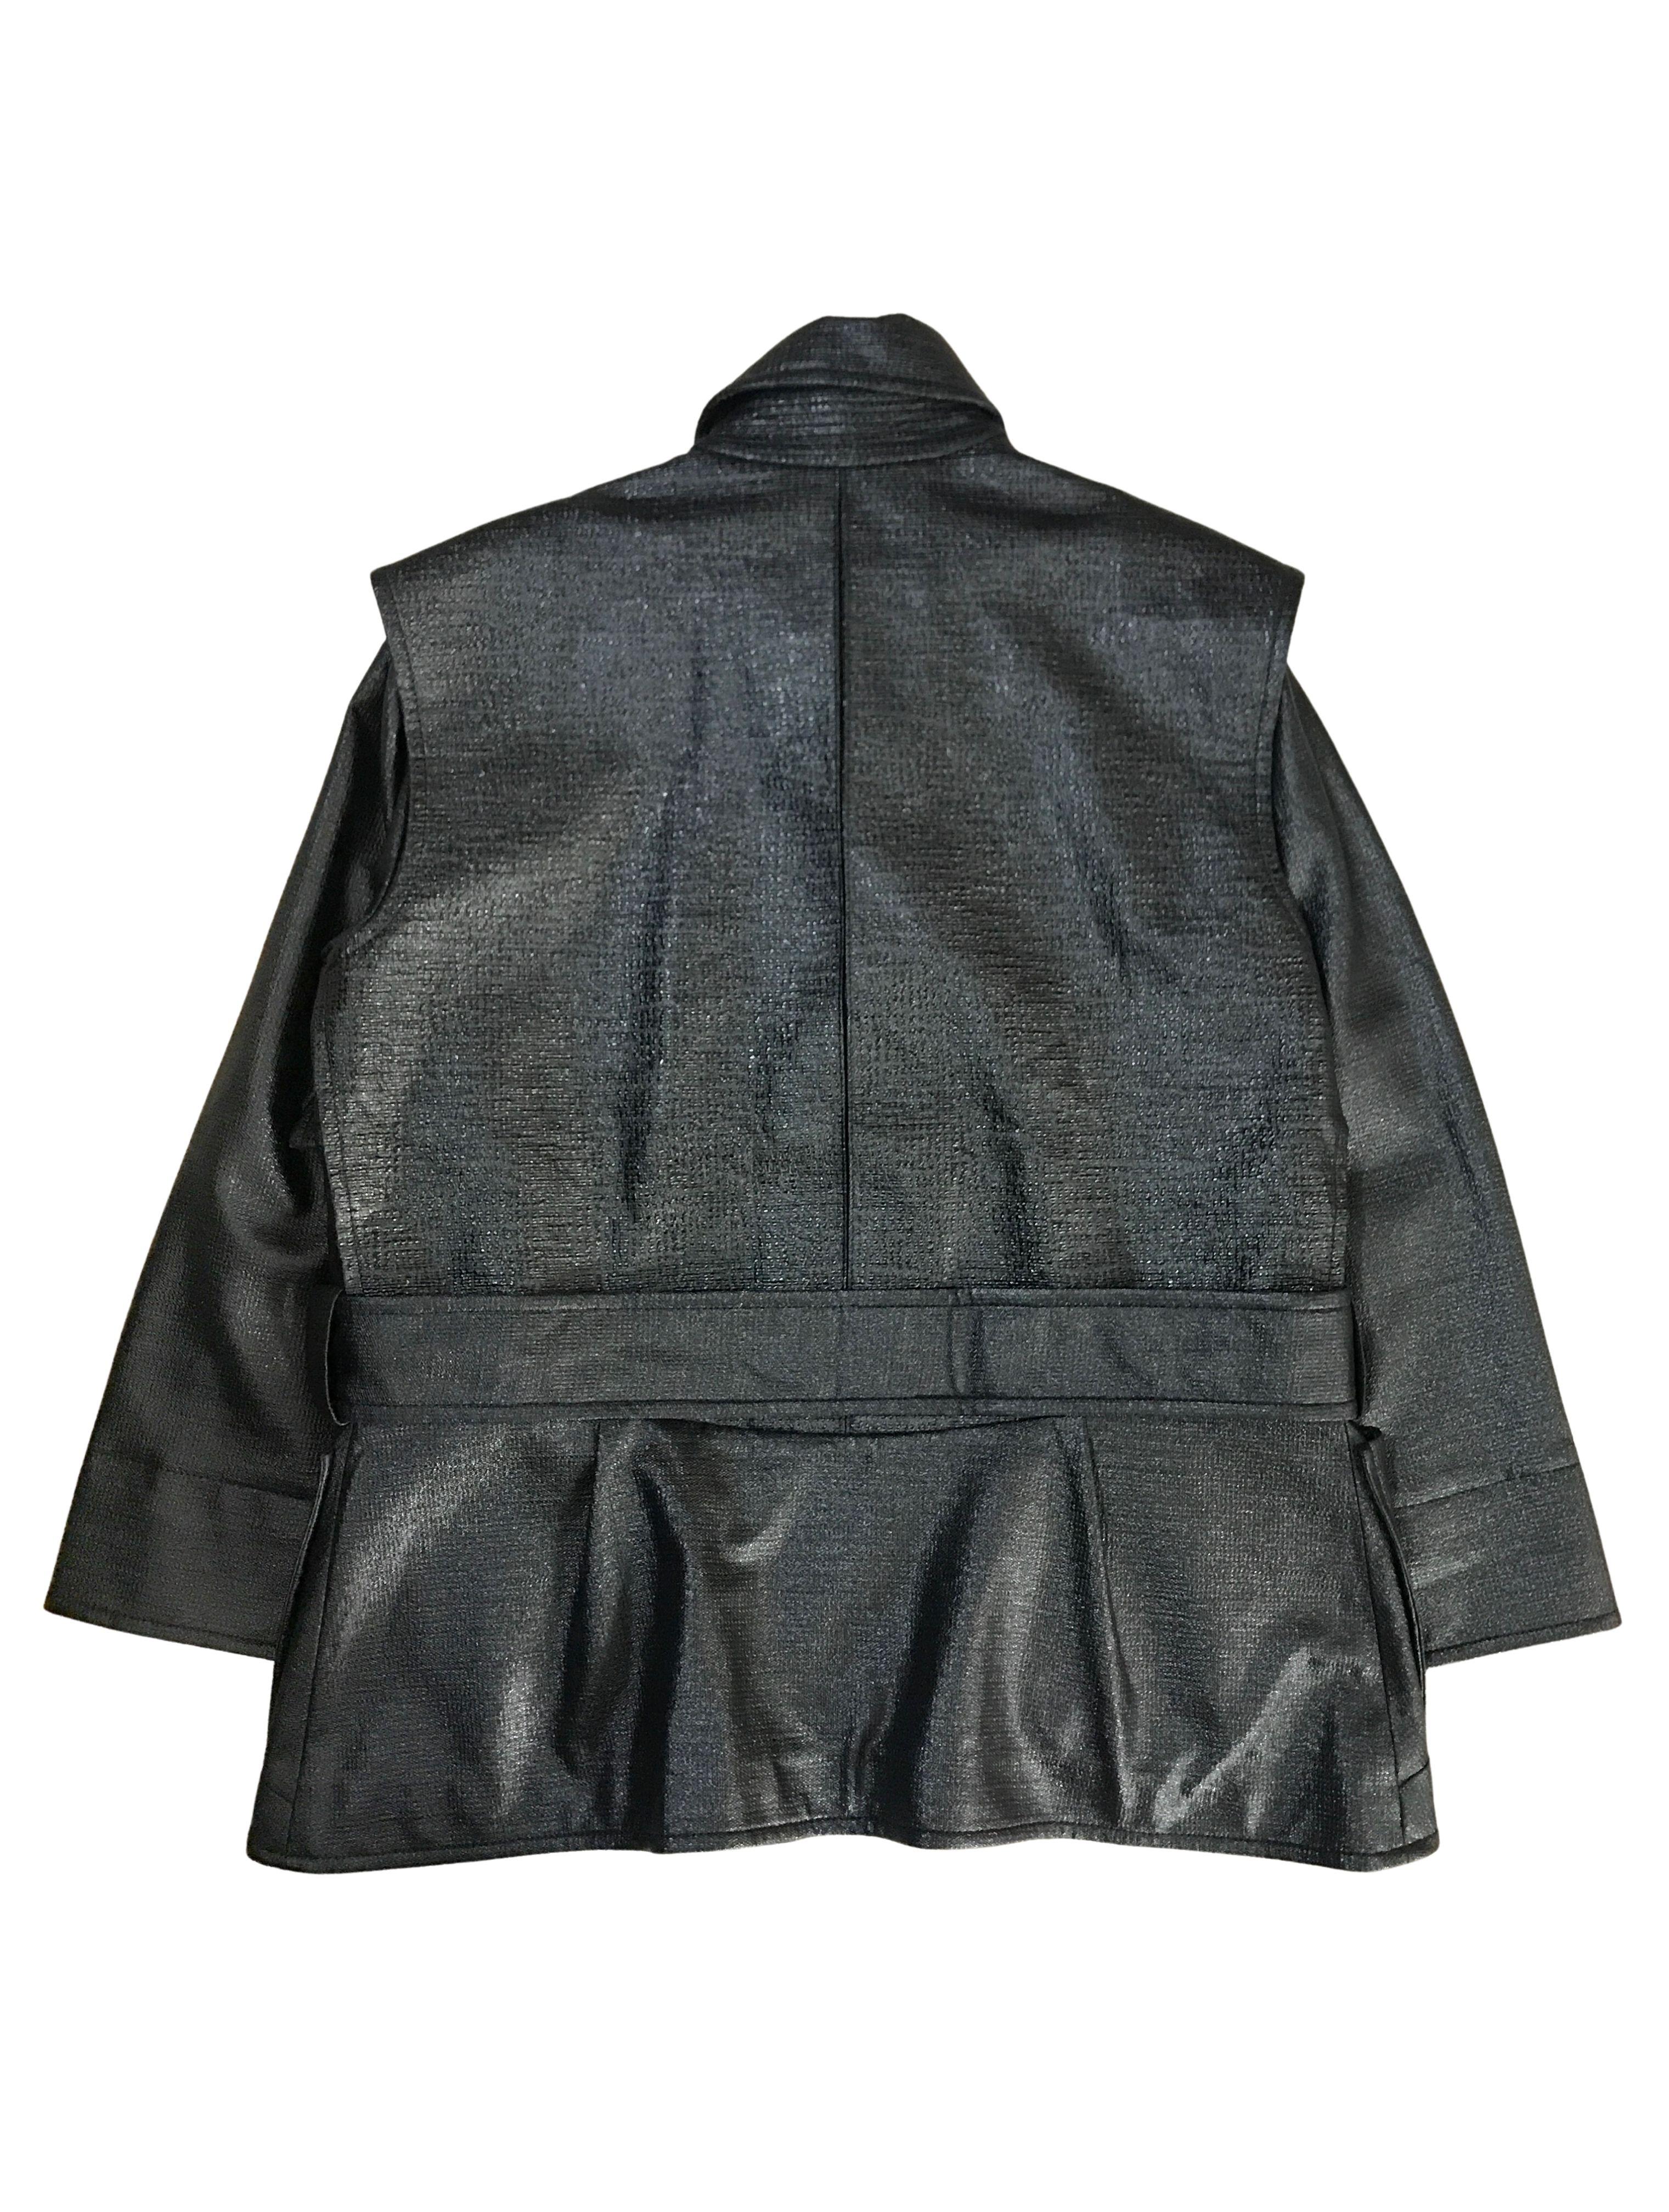 balenciaga deconstructed jacket